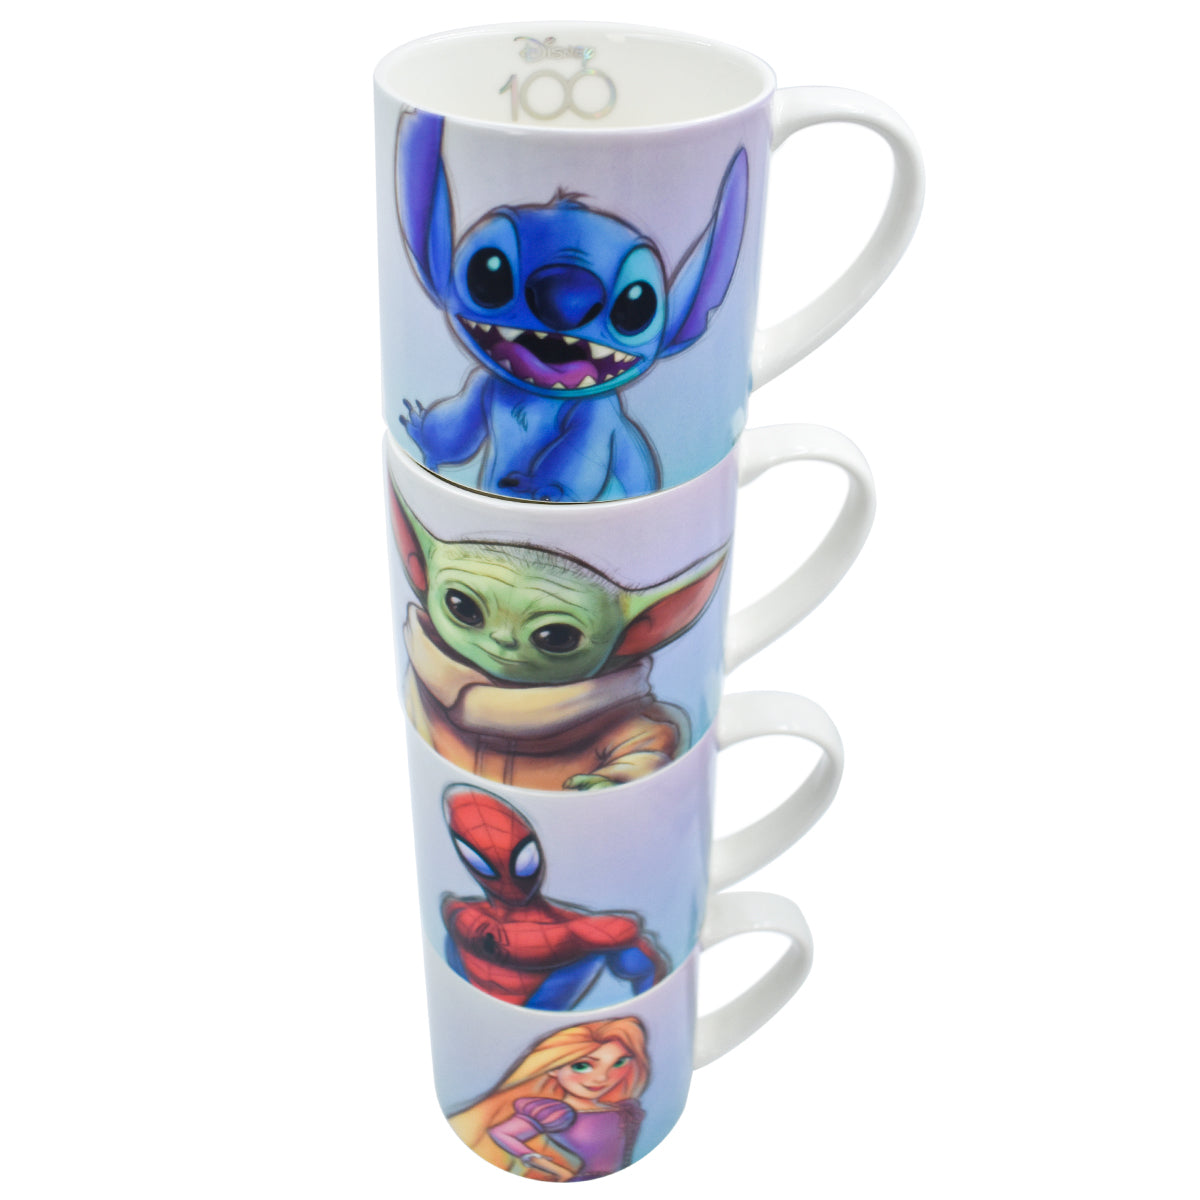 Juego Set Tazas Apilables Fun kids Disney 100 Años Princesa Pixar Marvel Star Wars Porcelana 320ml 4 pzas